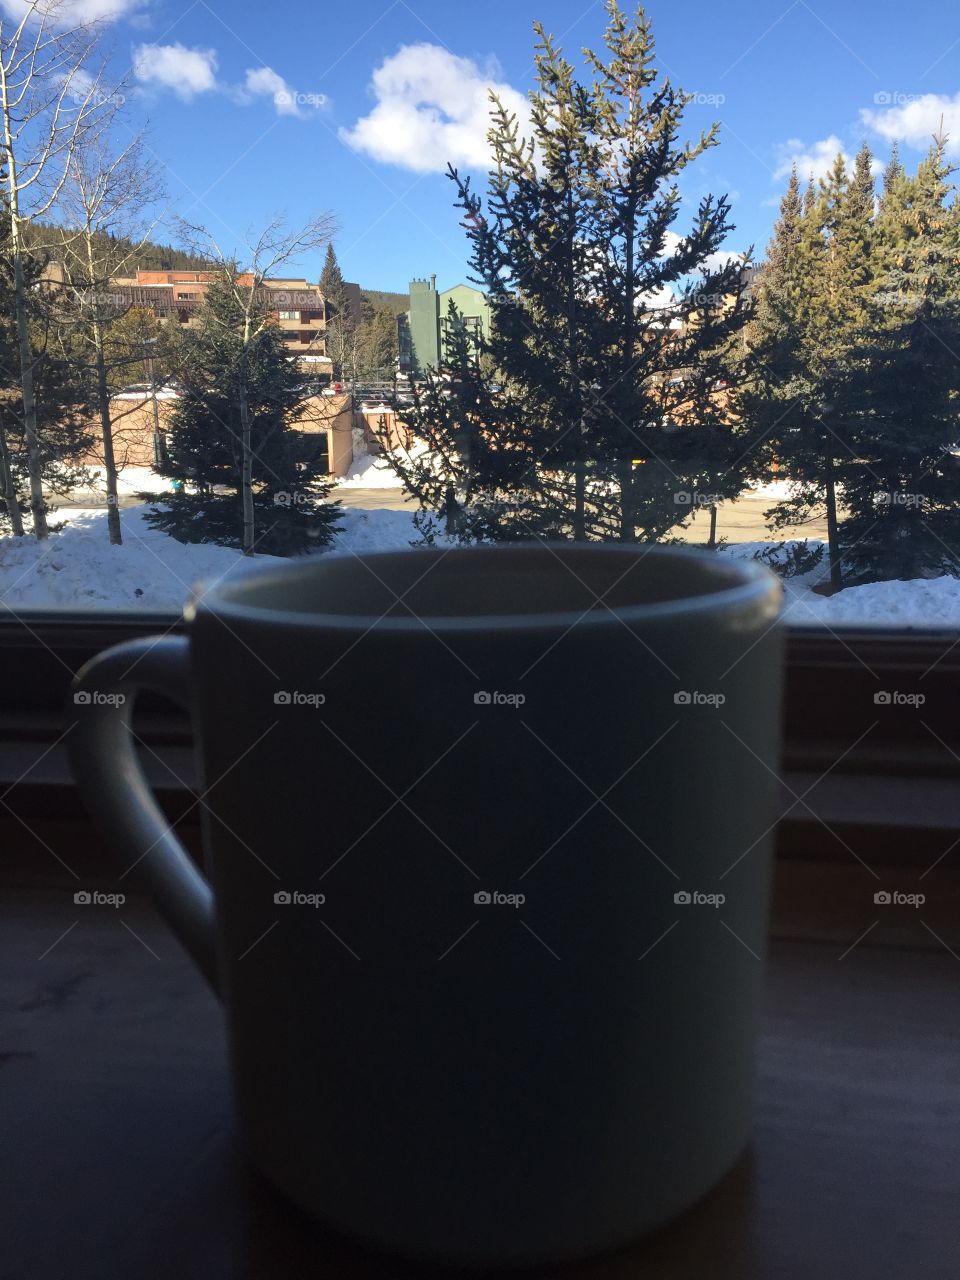 Coffee mug inside in the snow